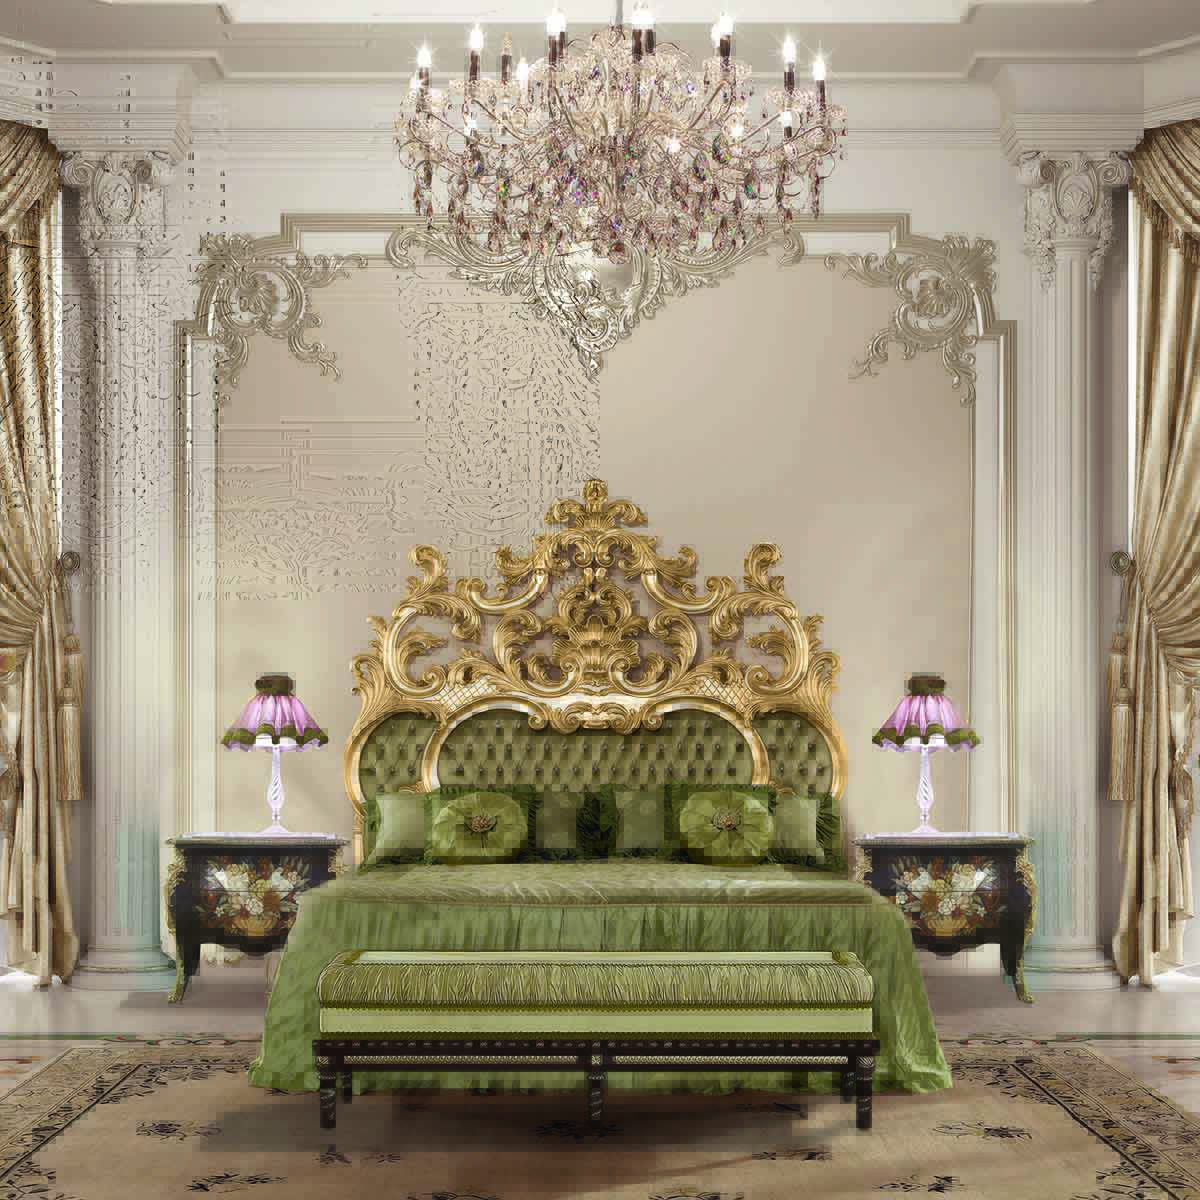 classic italian luxury bedroom furniture – top quality furniture - exclusive design - 100% made